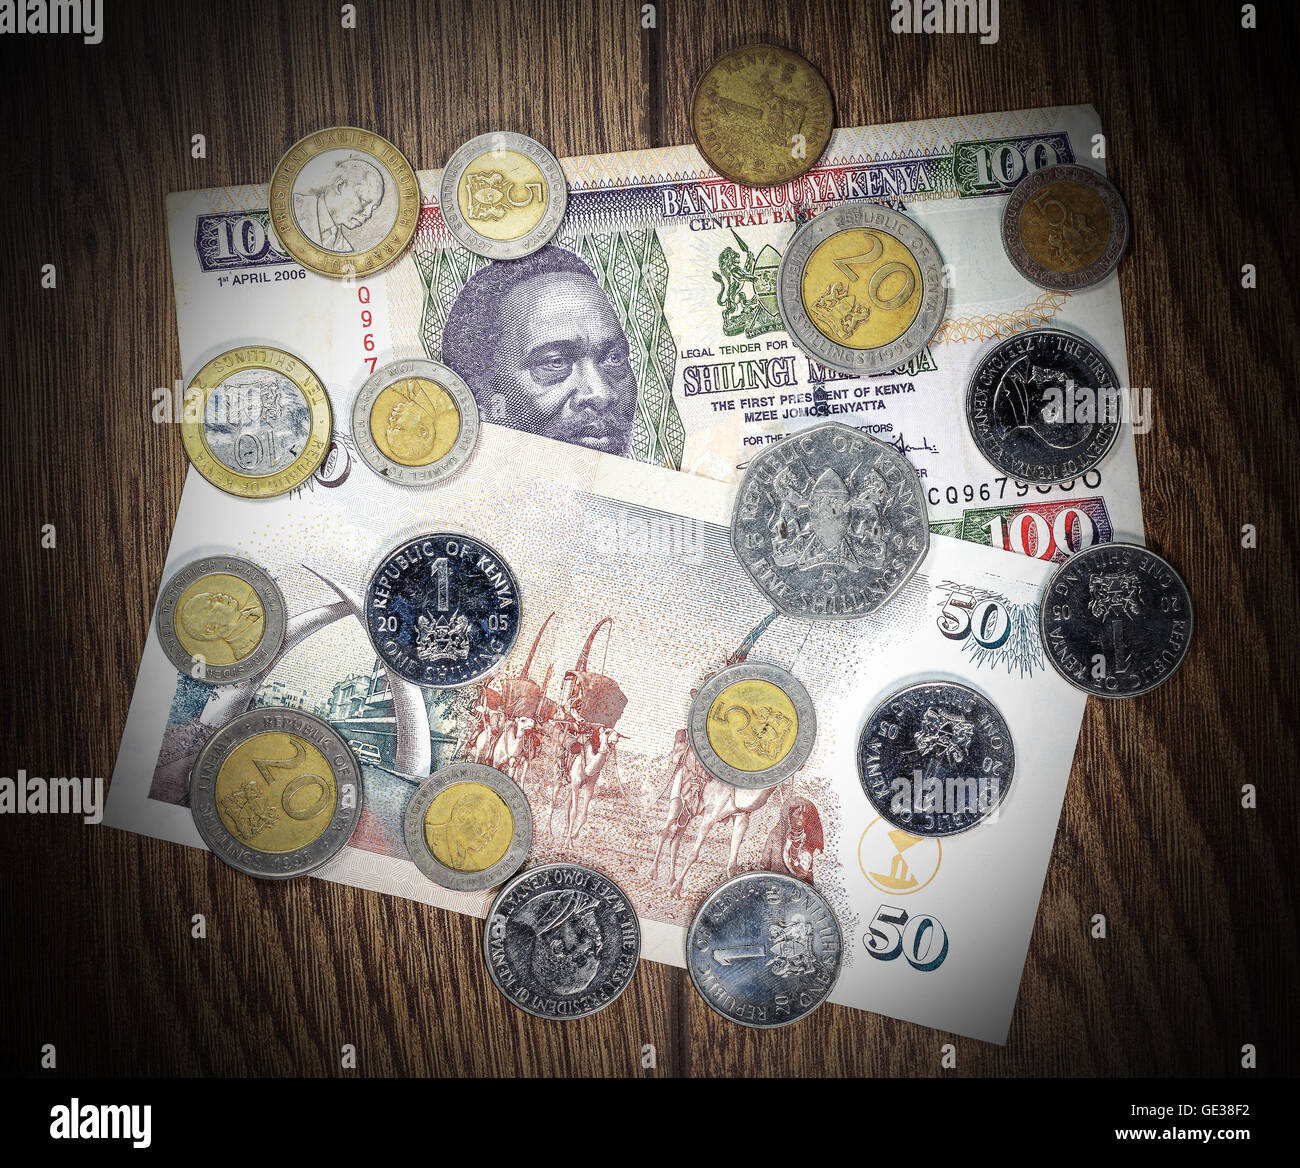 Kenya money Shilling, banknote and coins. Stock Photo